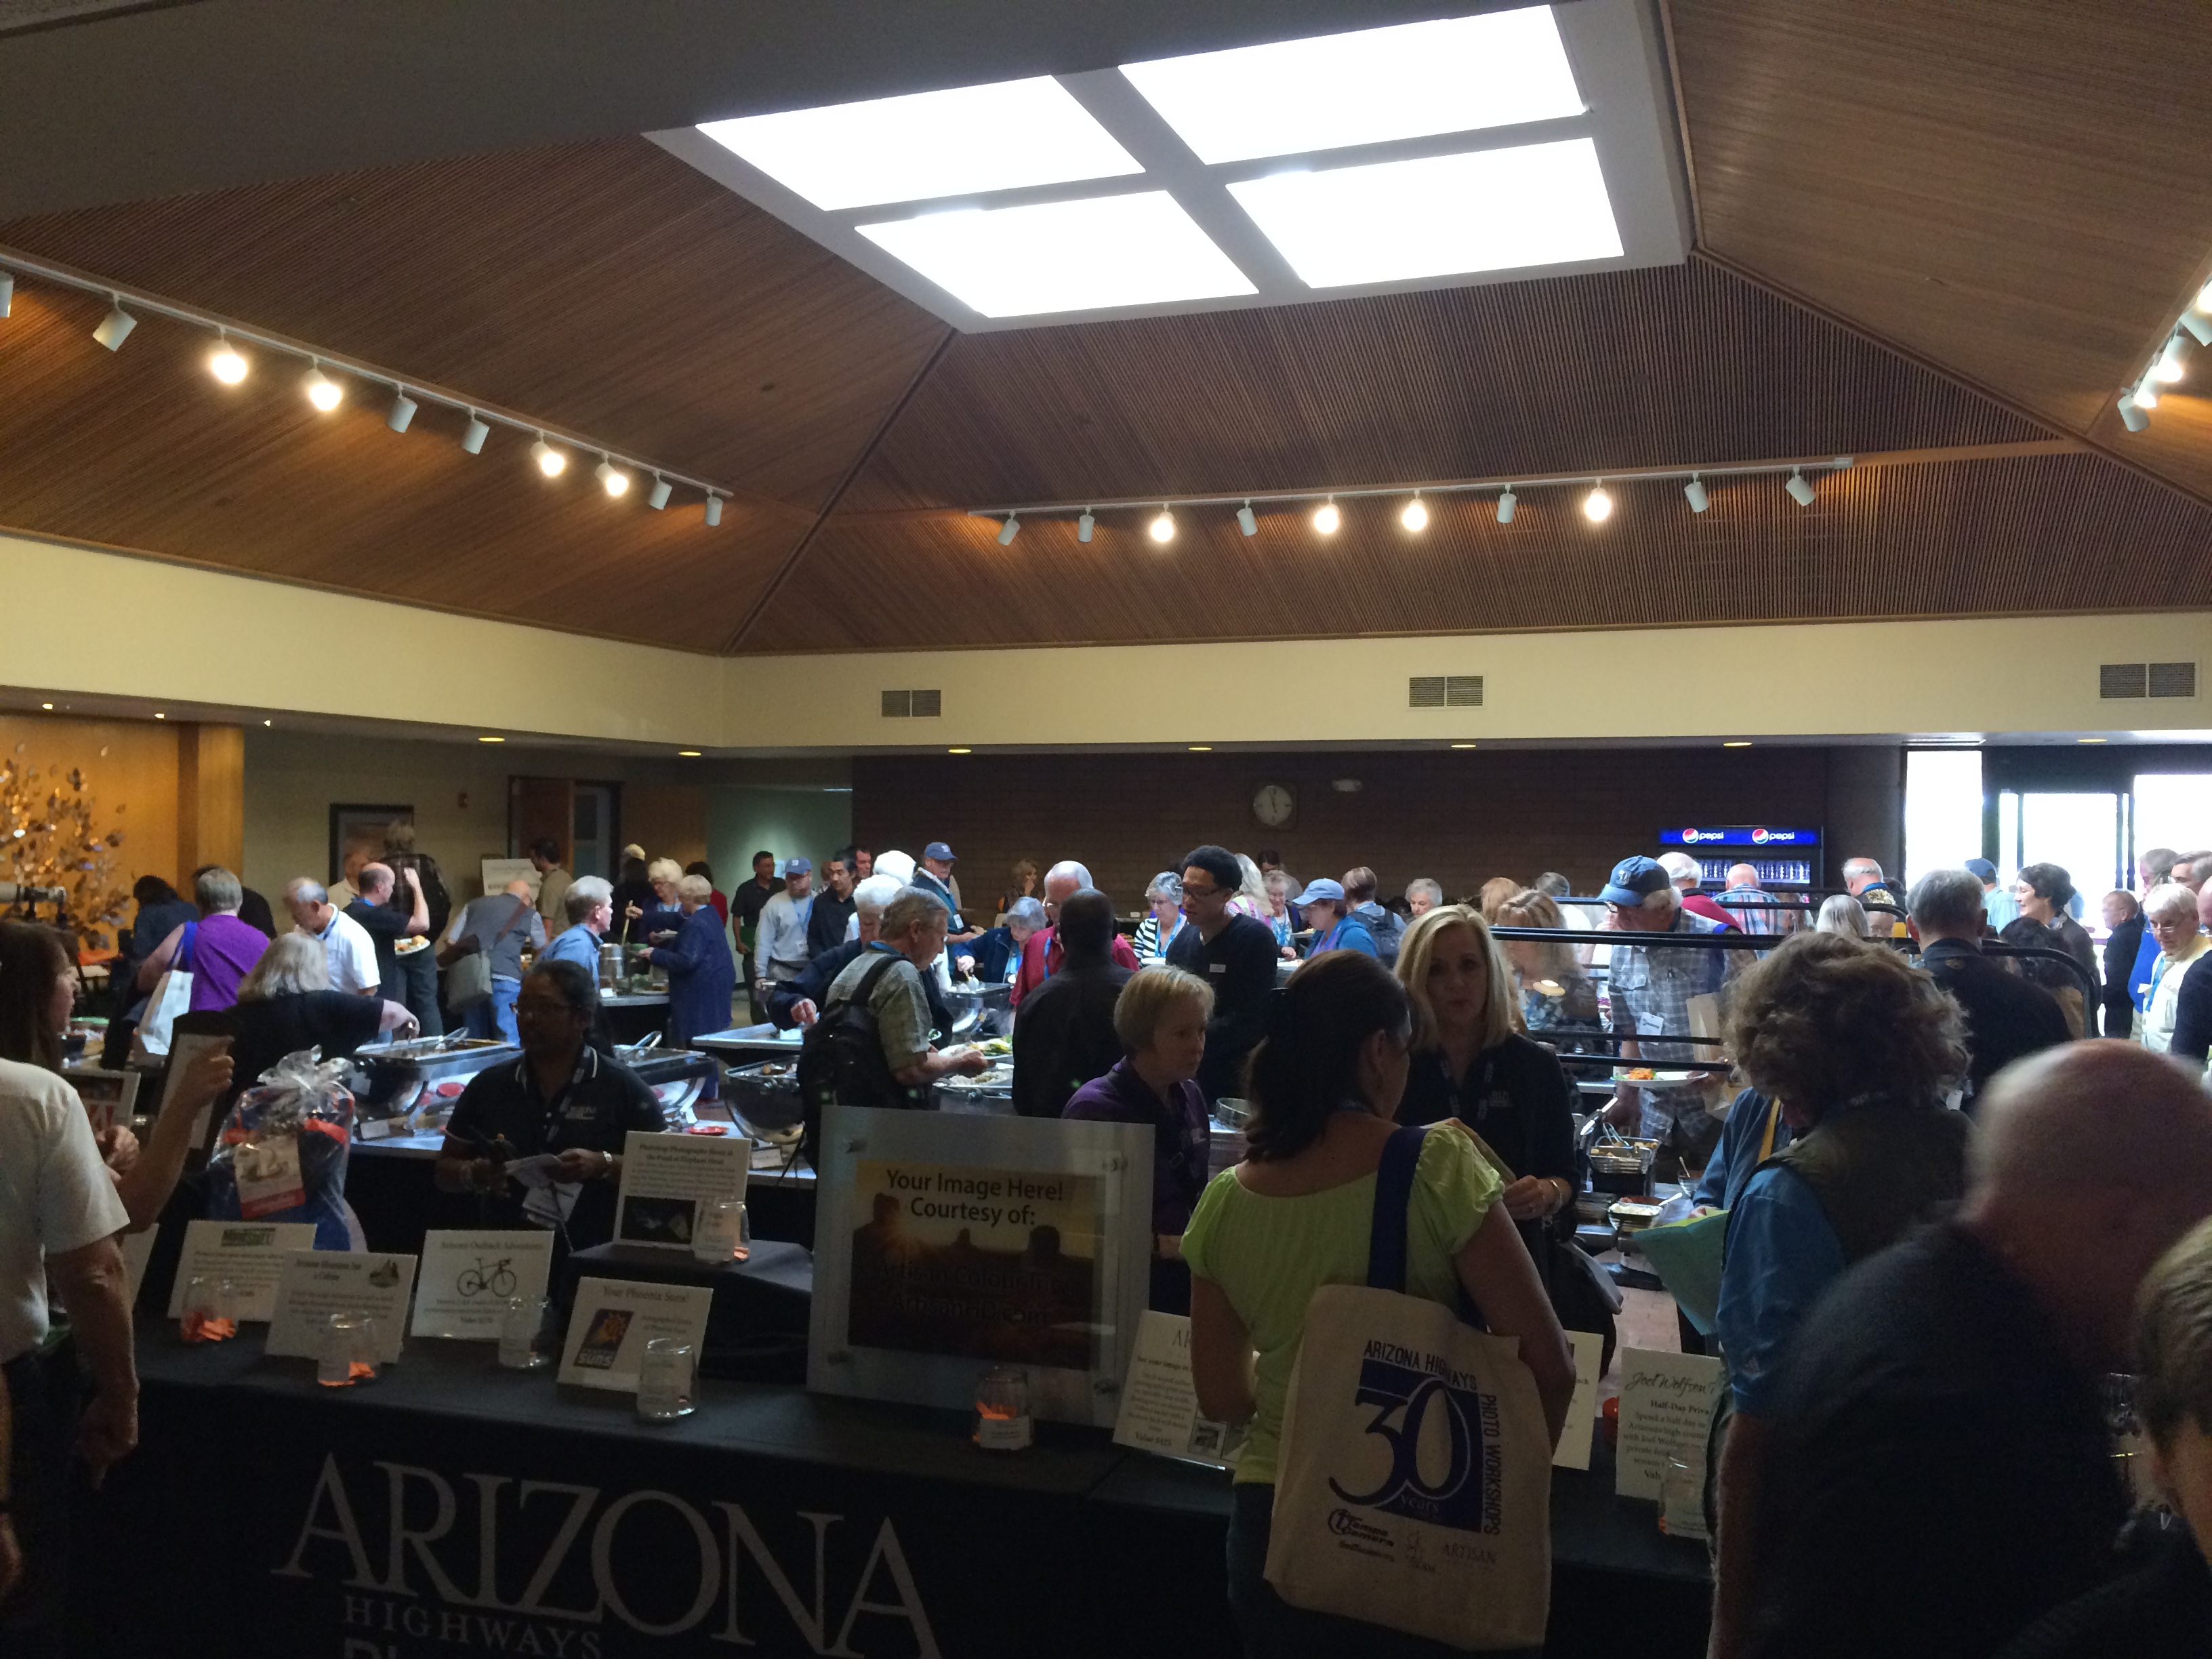 30th Photo Symposium for Arizona Highways conference